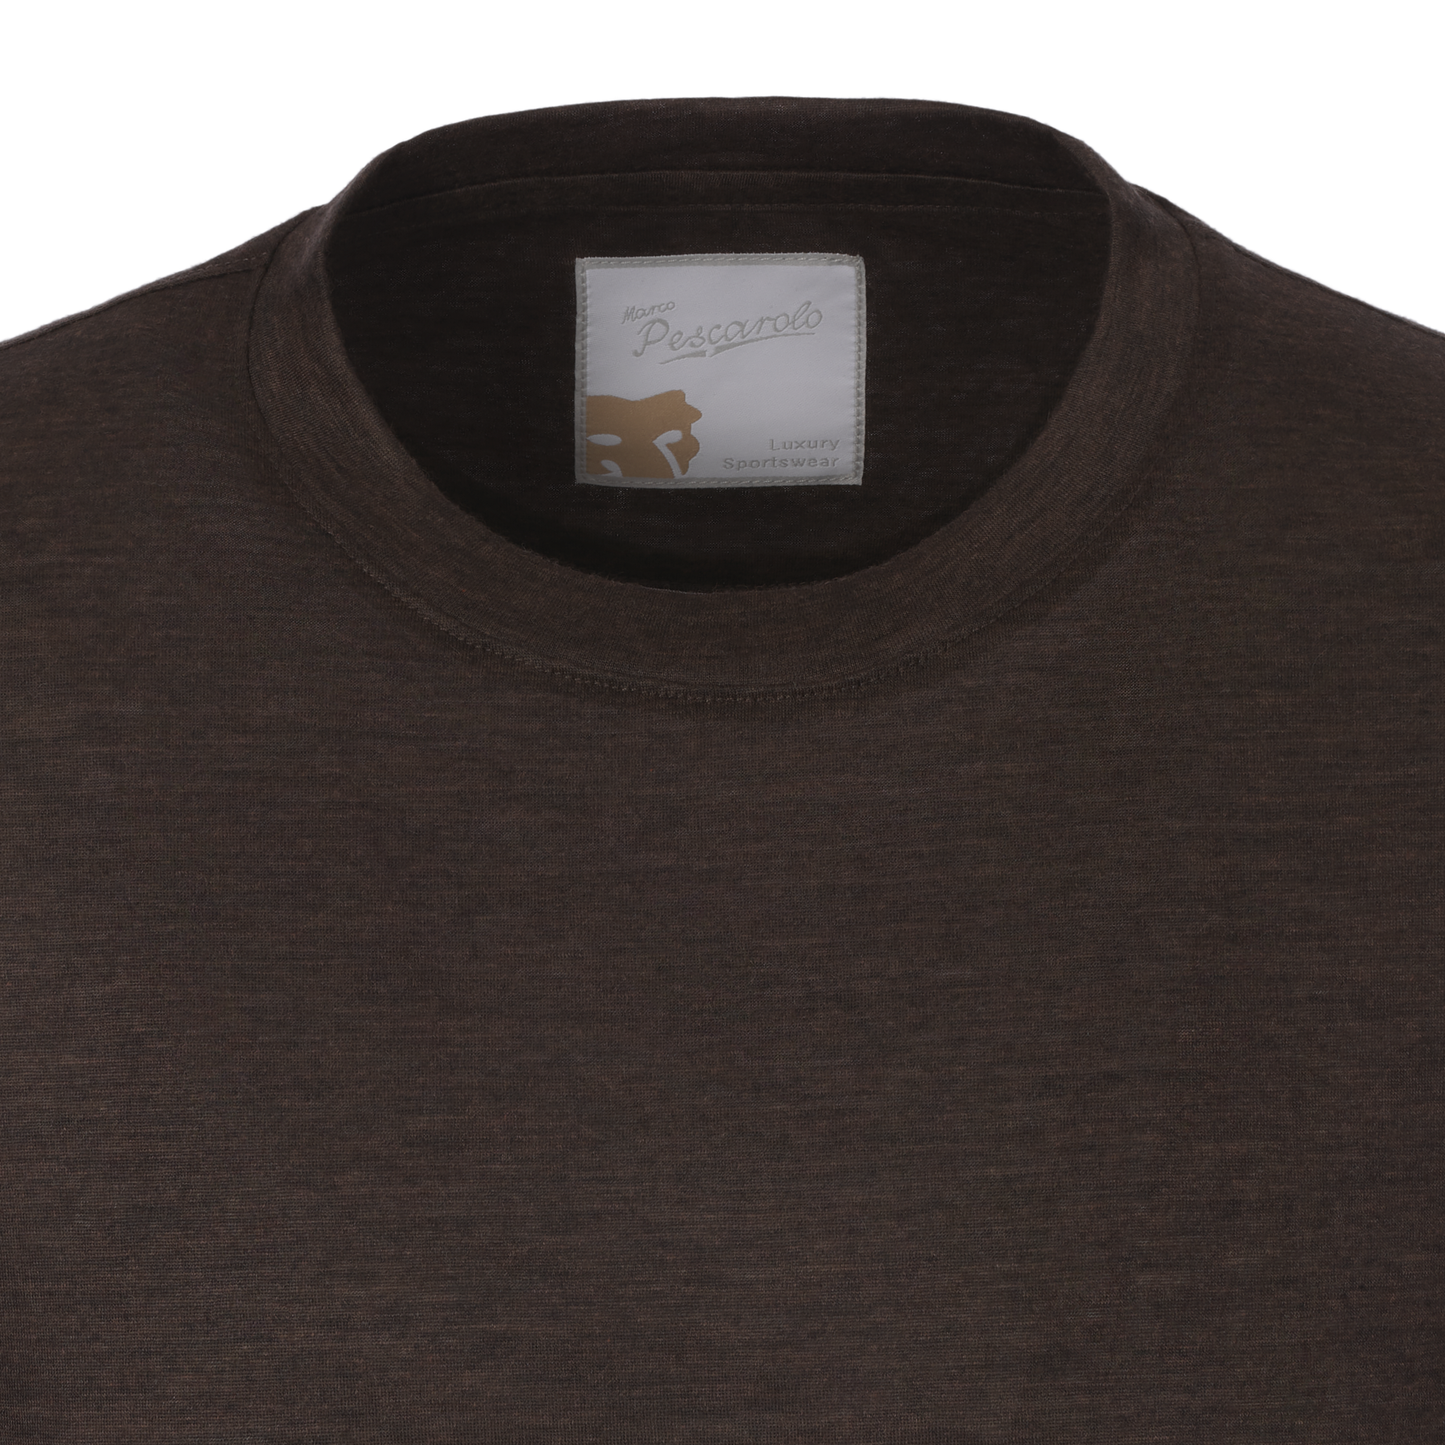 Marco Pescarolo Crew-Neck Cashmere Long Sleeve T-Shirt in Dark Brown - SARTALE